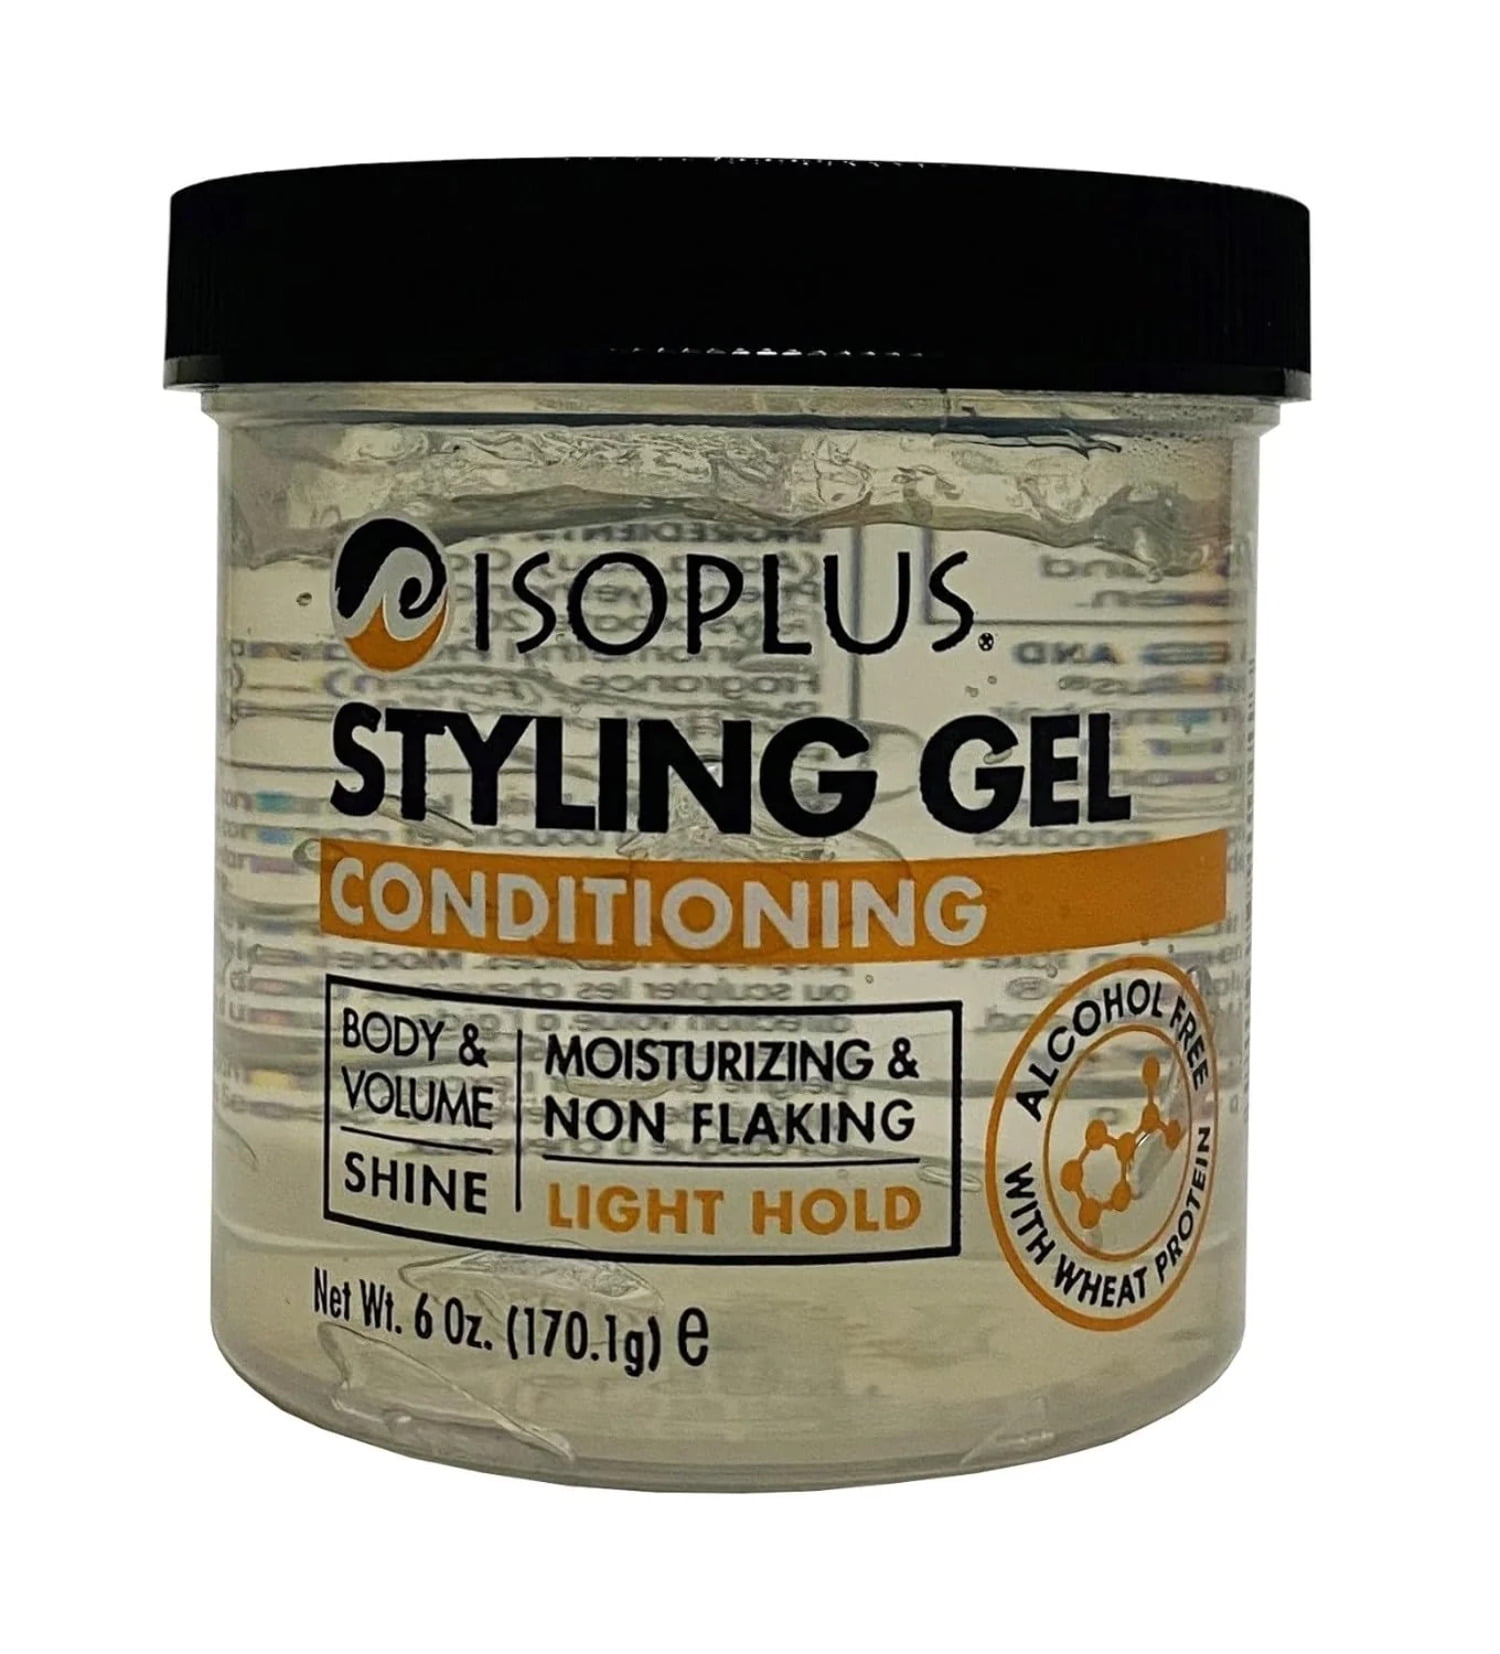 Isoplus Styling Gel 70% Free 425ml - Clicks